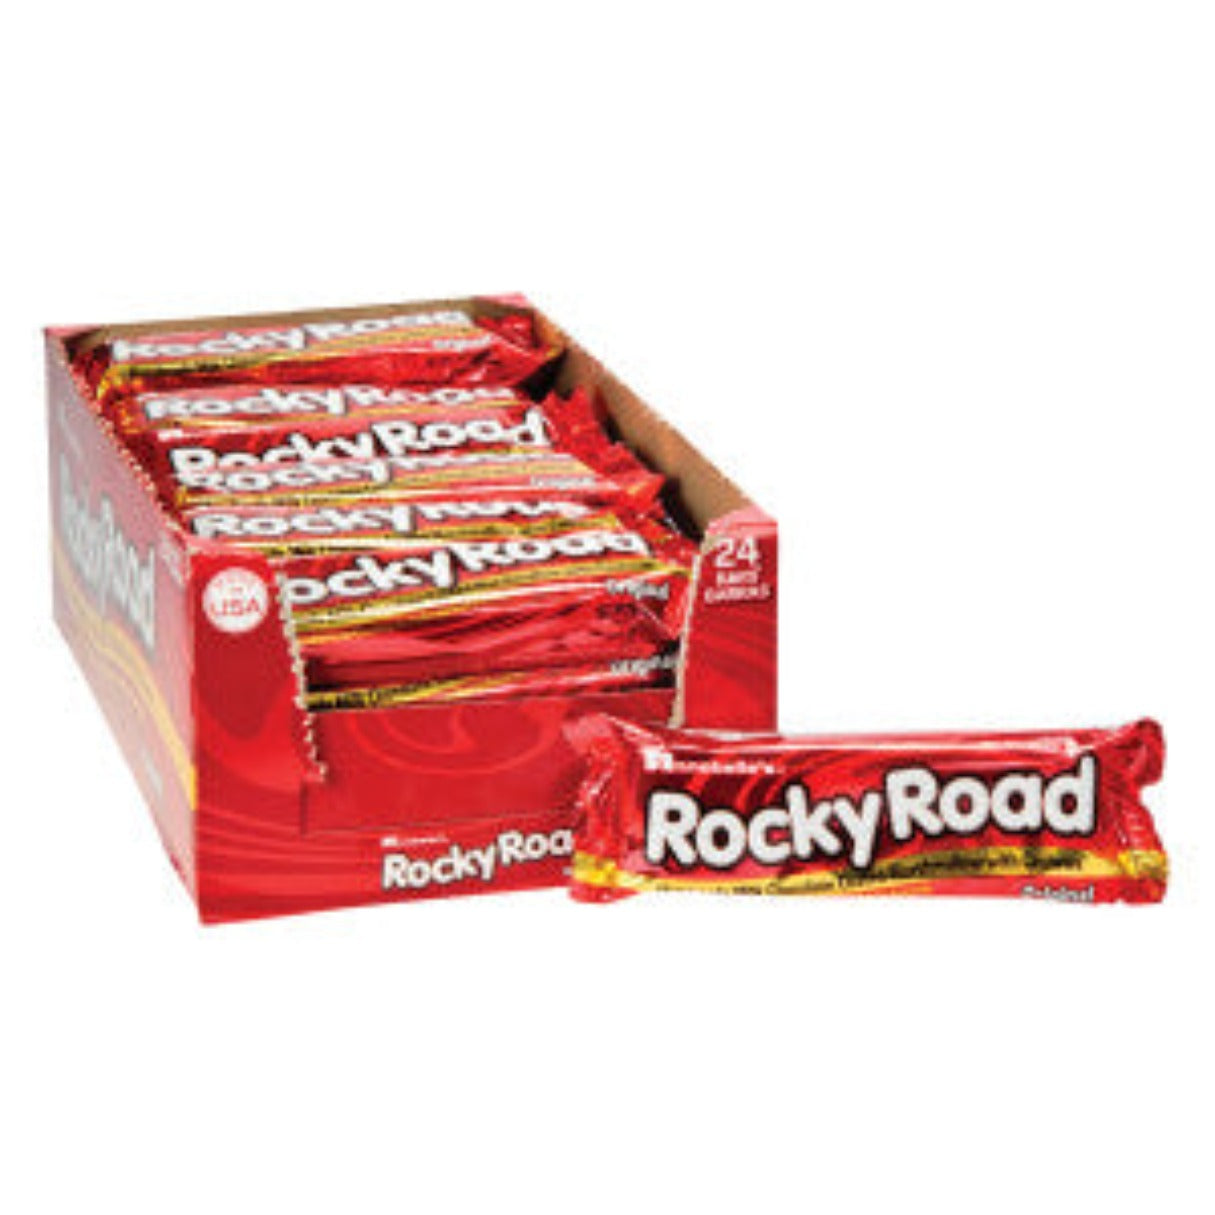 Rocky Road Candy Bar 1.82oz  - 24ct